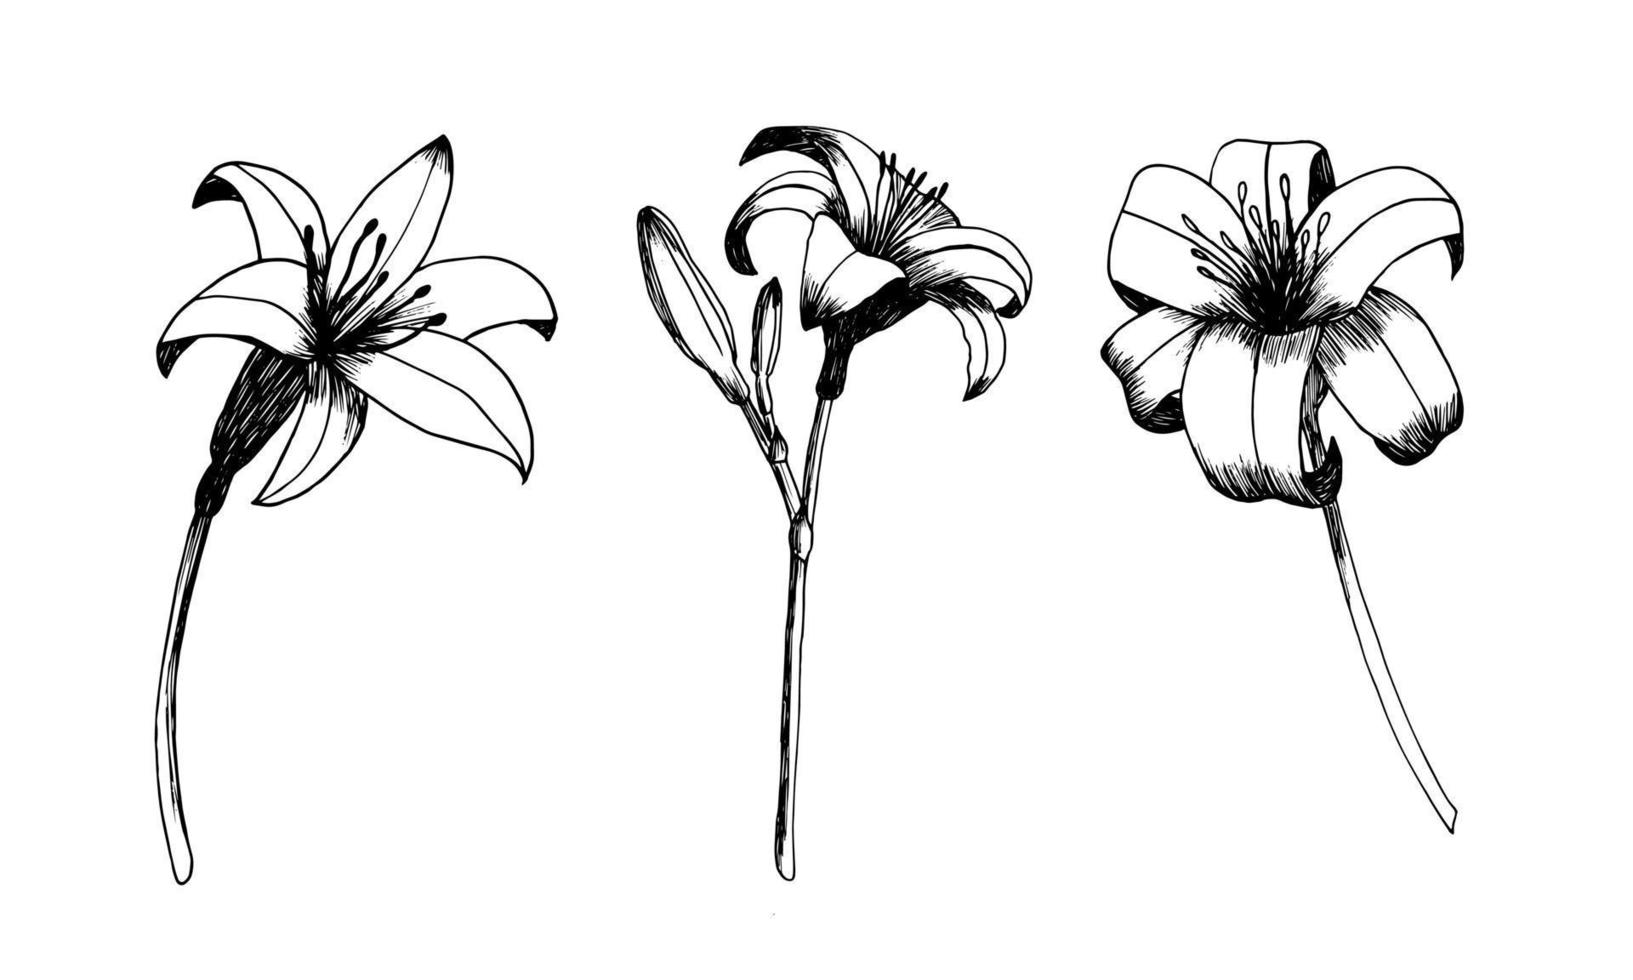 conjunto de vectores de azucenas. boceto de lirio botánico dibujado a mano.  diferentes tipos de lirios de día aislados sobre fondo blanco. ilustración  de flor de tinta realista. 18835412 Vector en Vecteezy